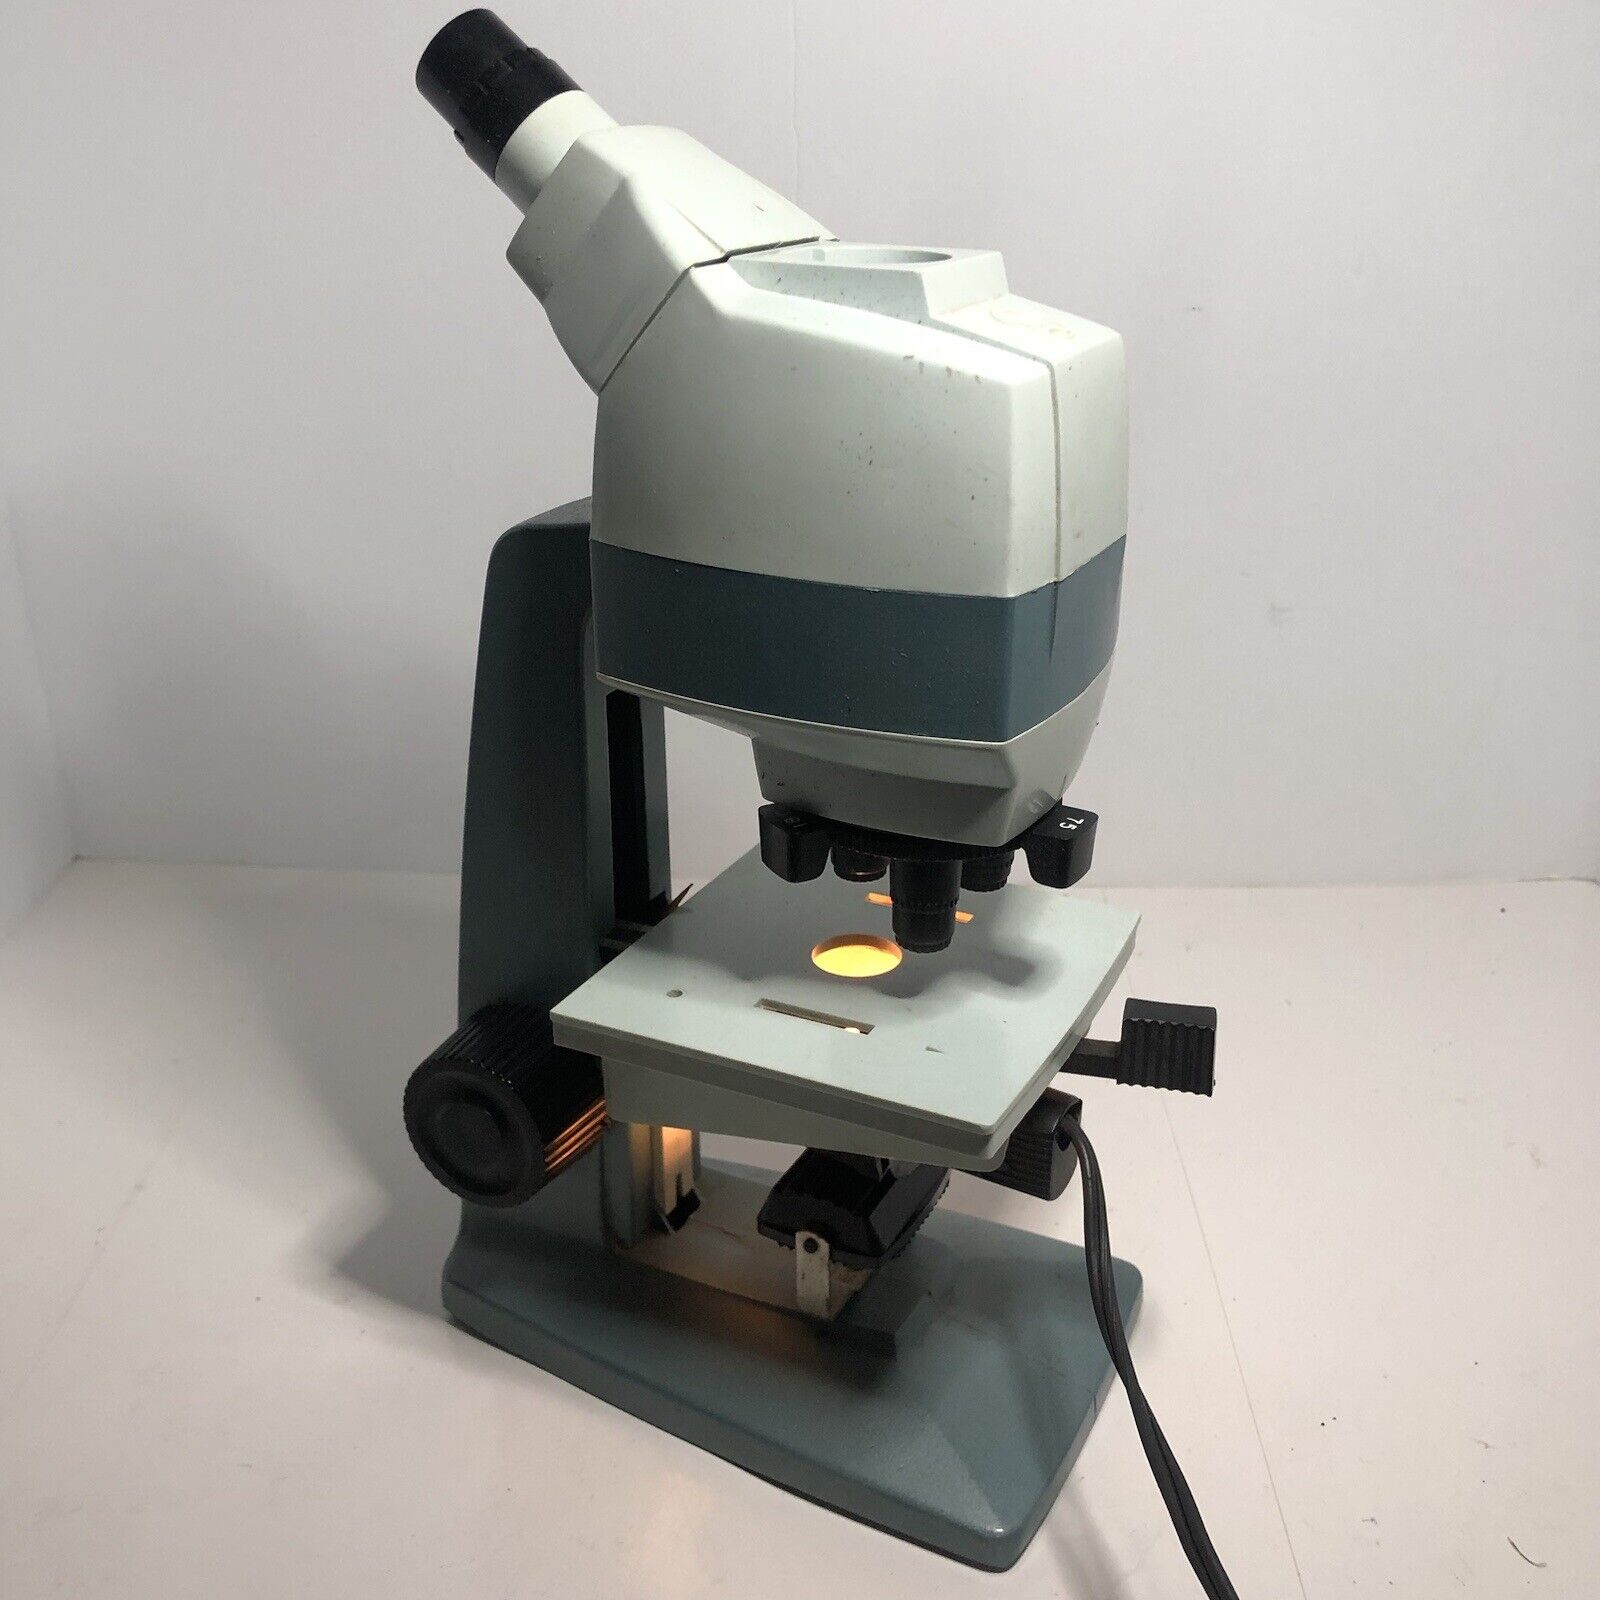 VTG Lionel-Porter Microcraft 22120 Microscope With Slides. Tested Works.